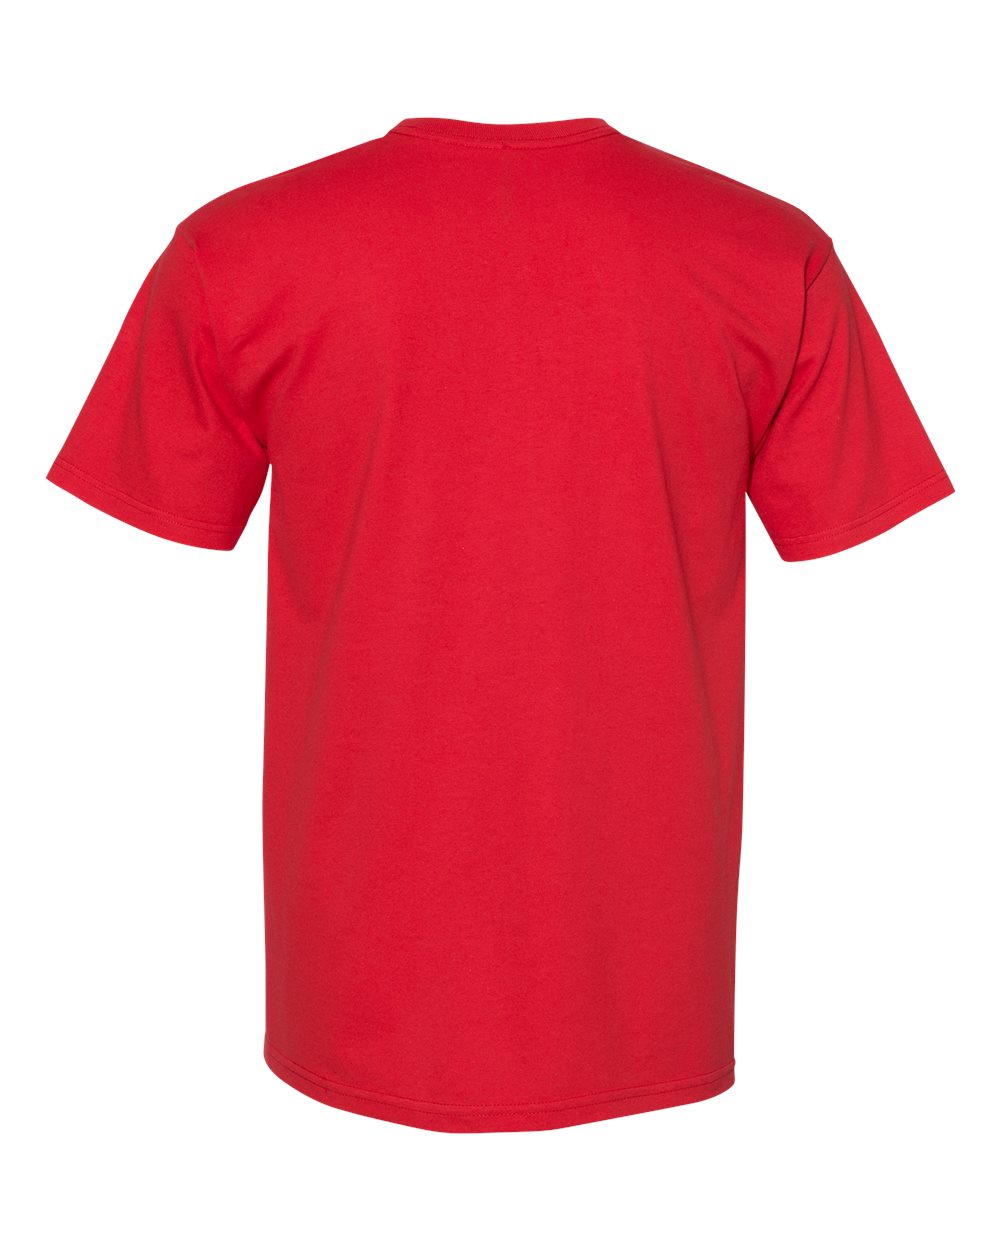 ALSTYLE Mens Cotton Blank Premium Short Sleeve Tee T Shirt 1701 up to 3XL |  eBay